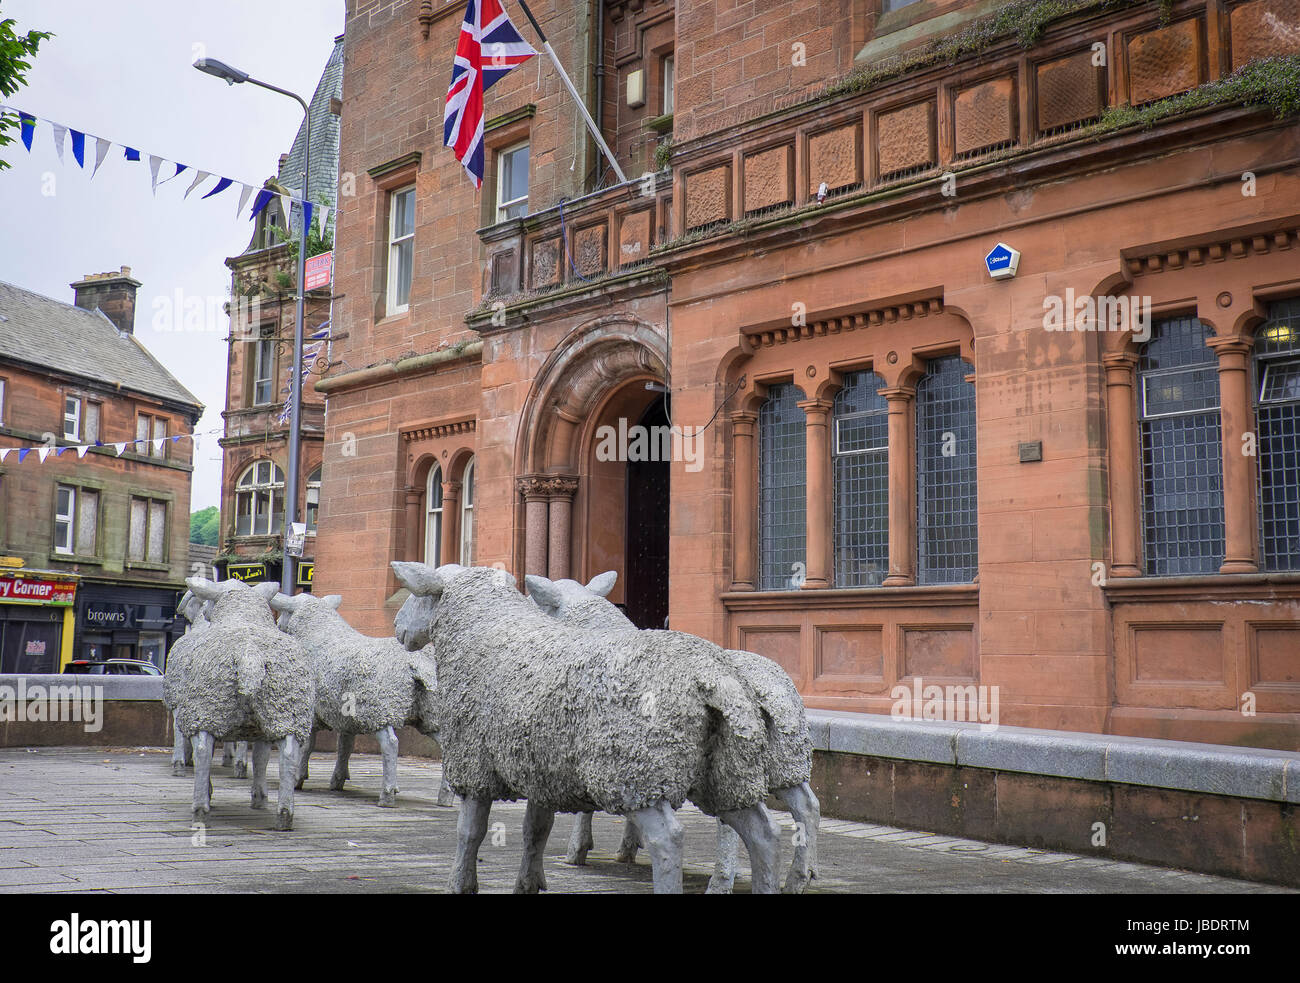 Lockerbie,s sheep sculptures Stock Photo